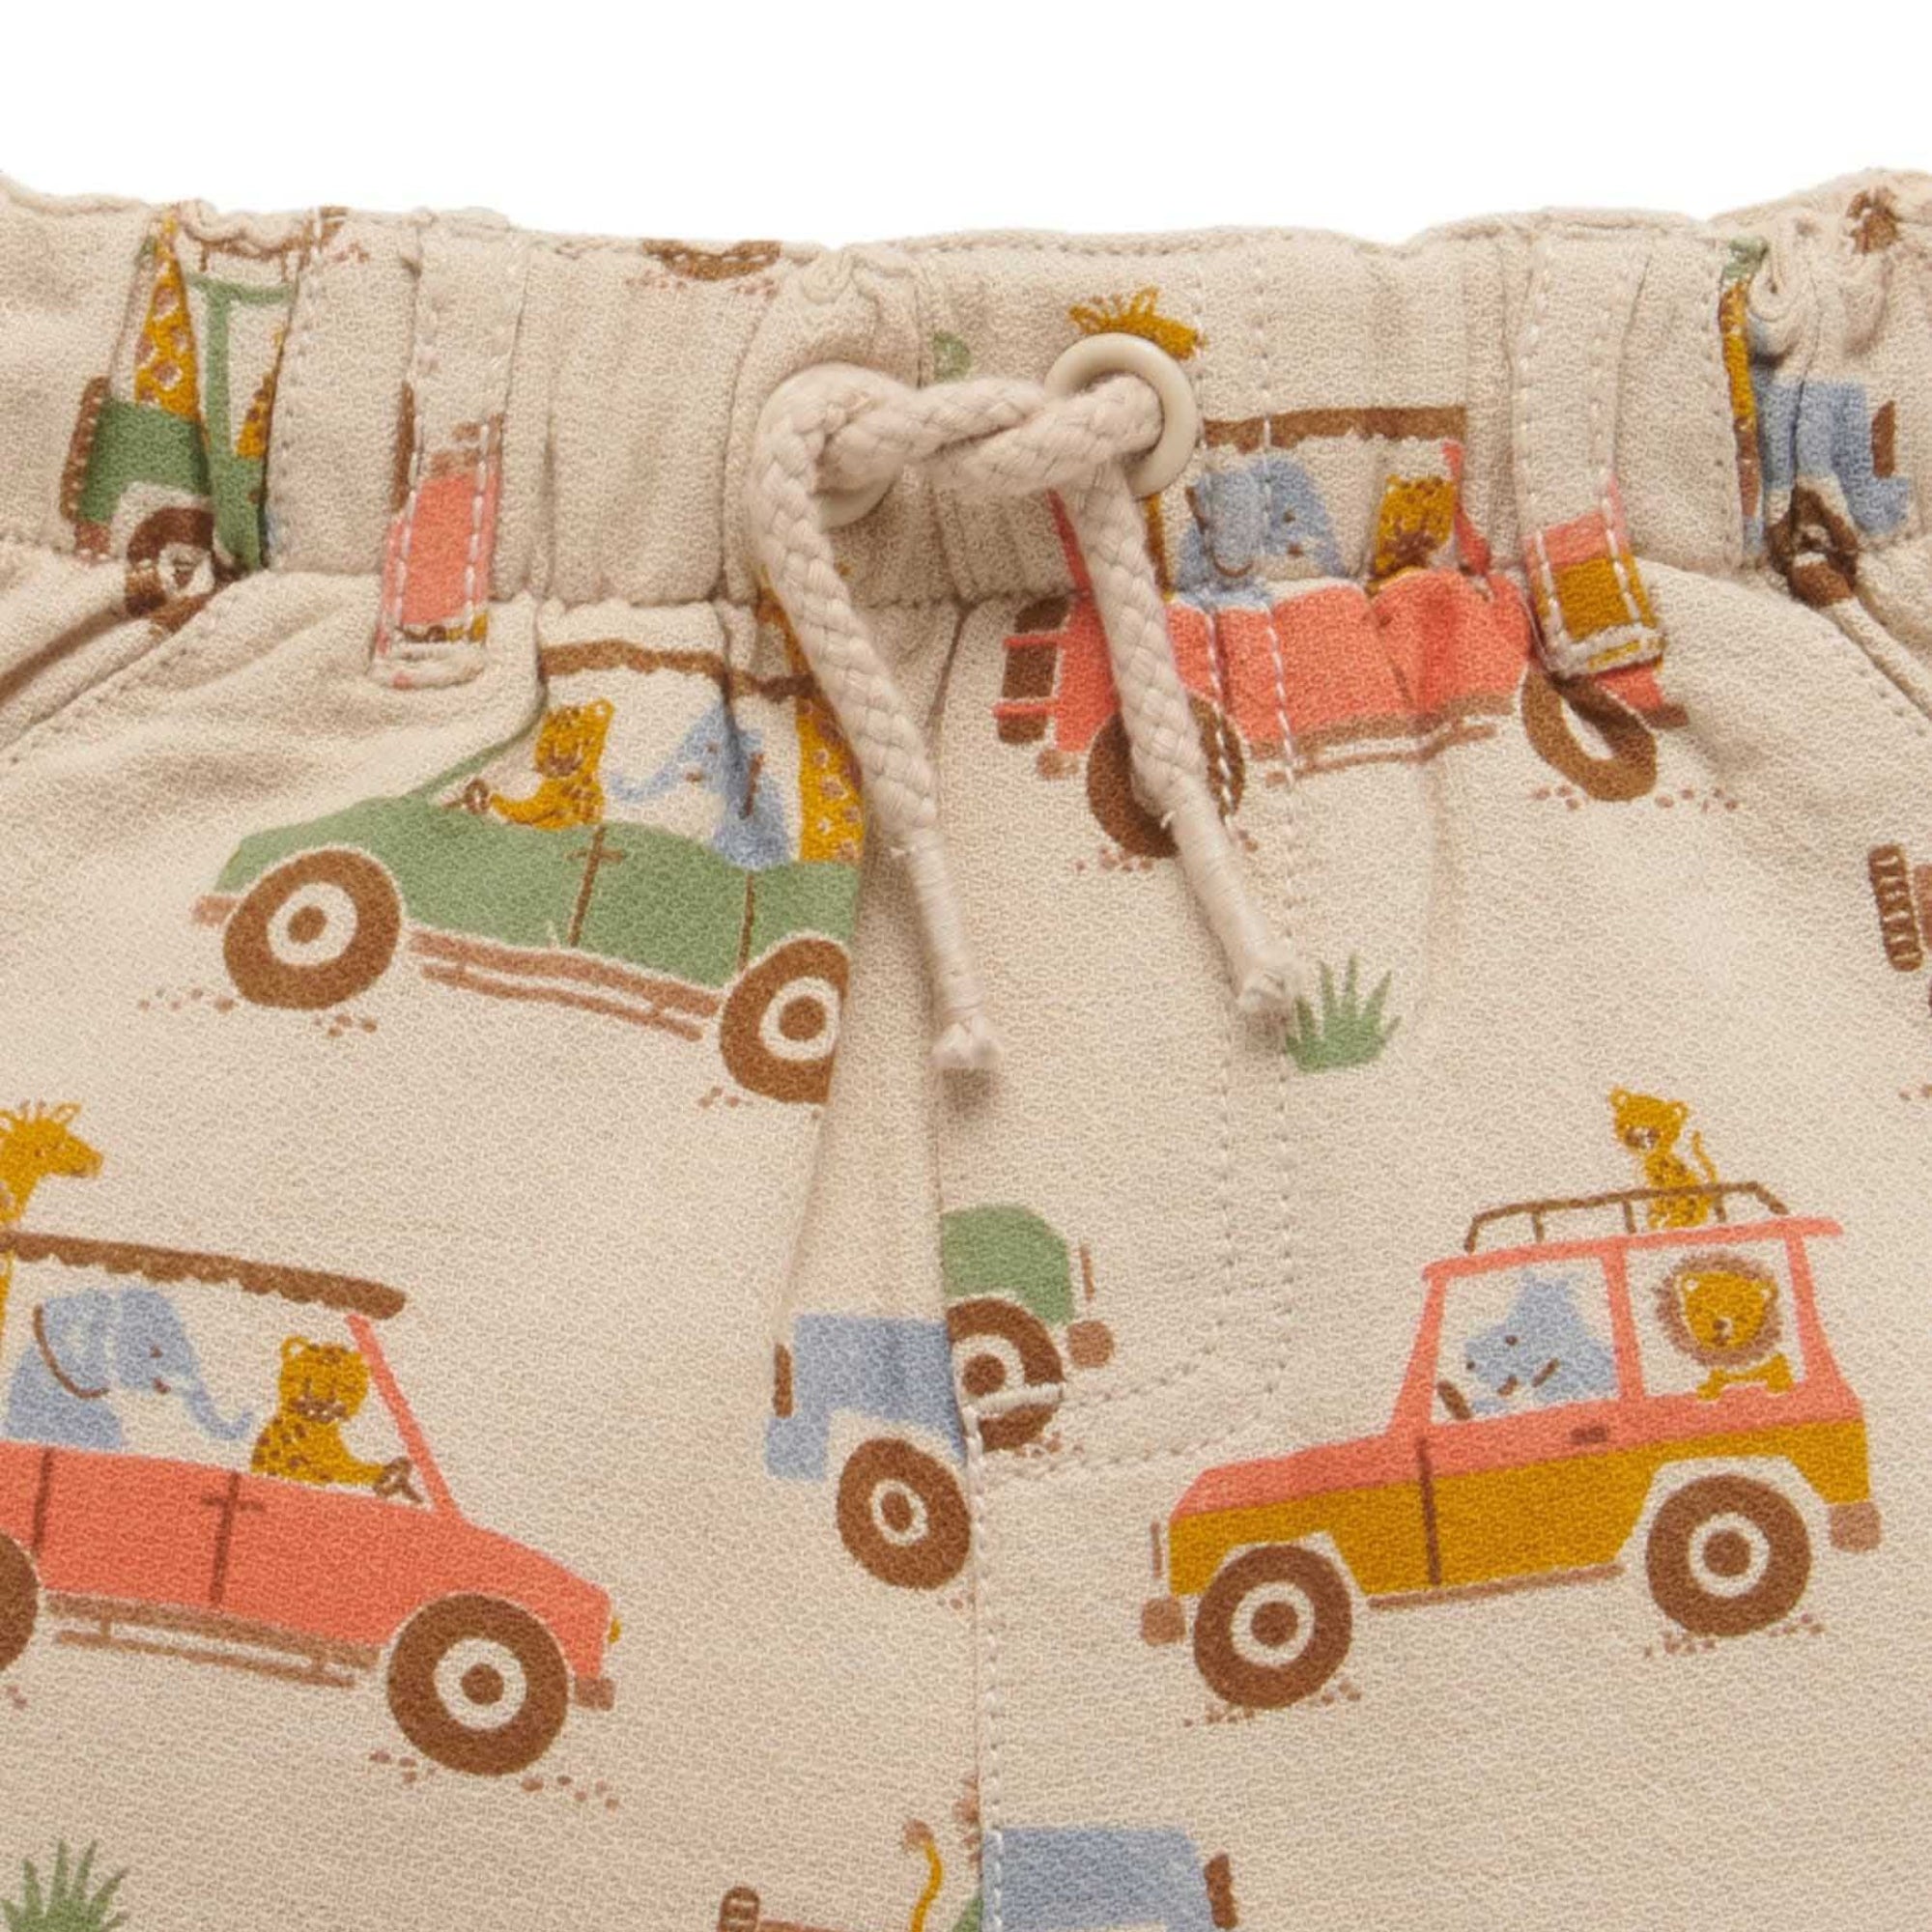 Purebaby Safari Pull On Shorts - Safari Print